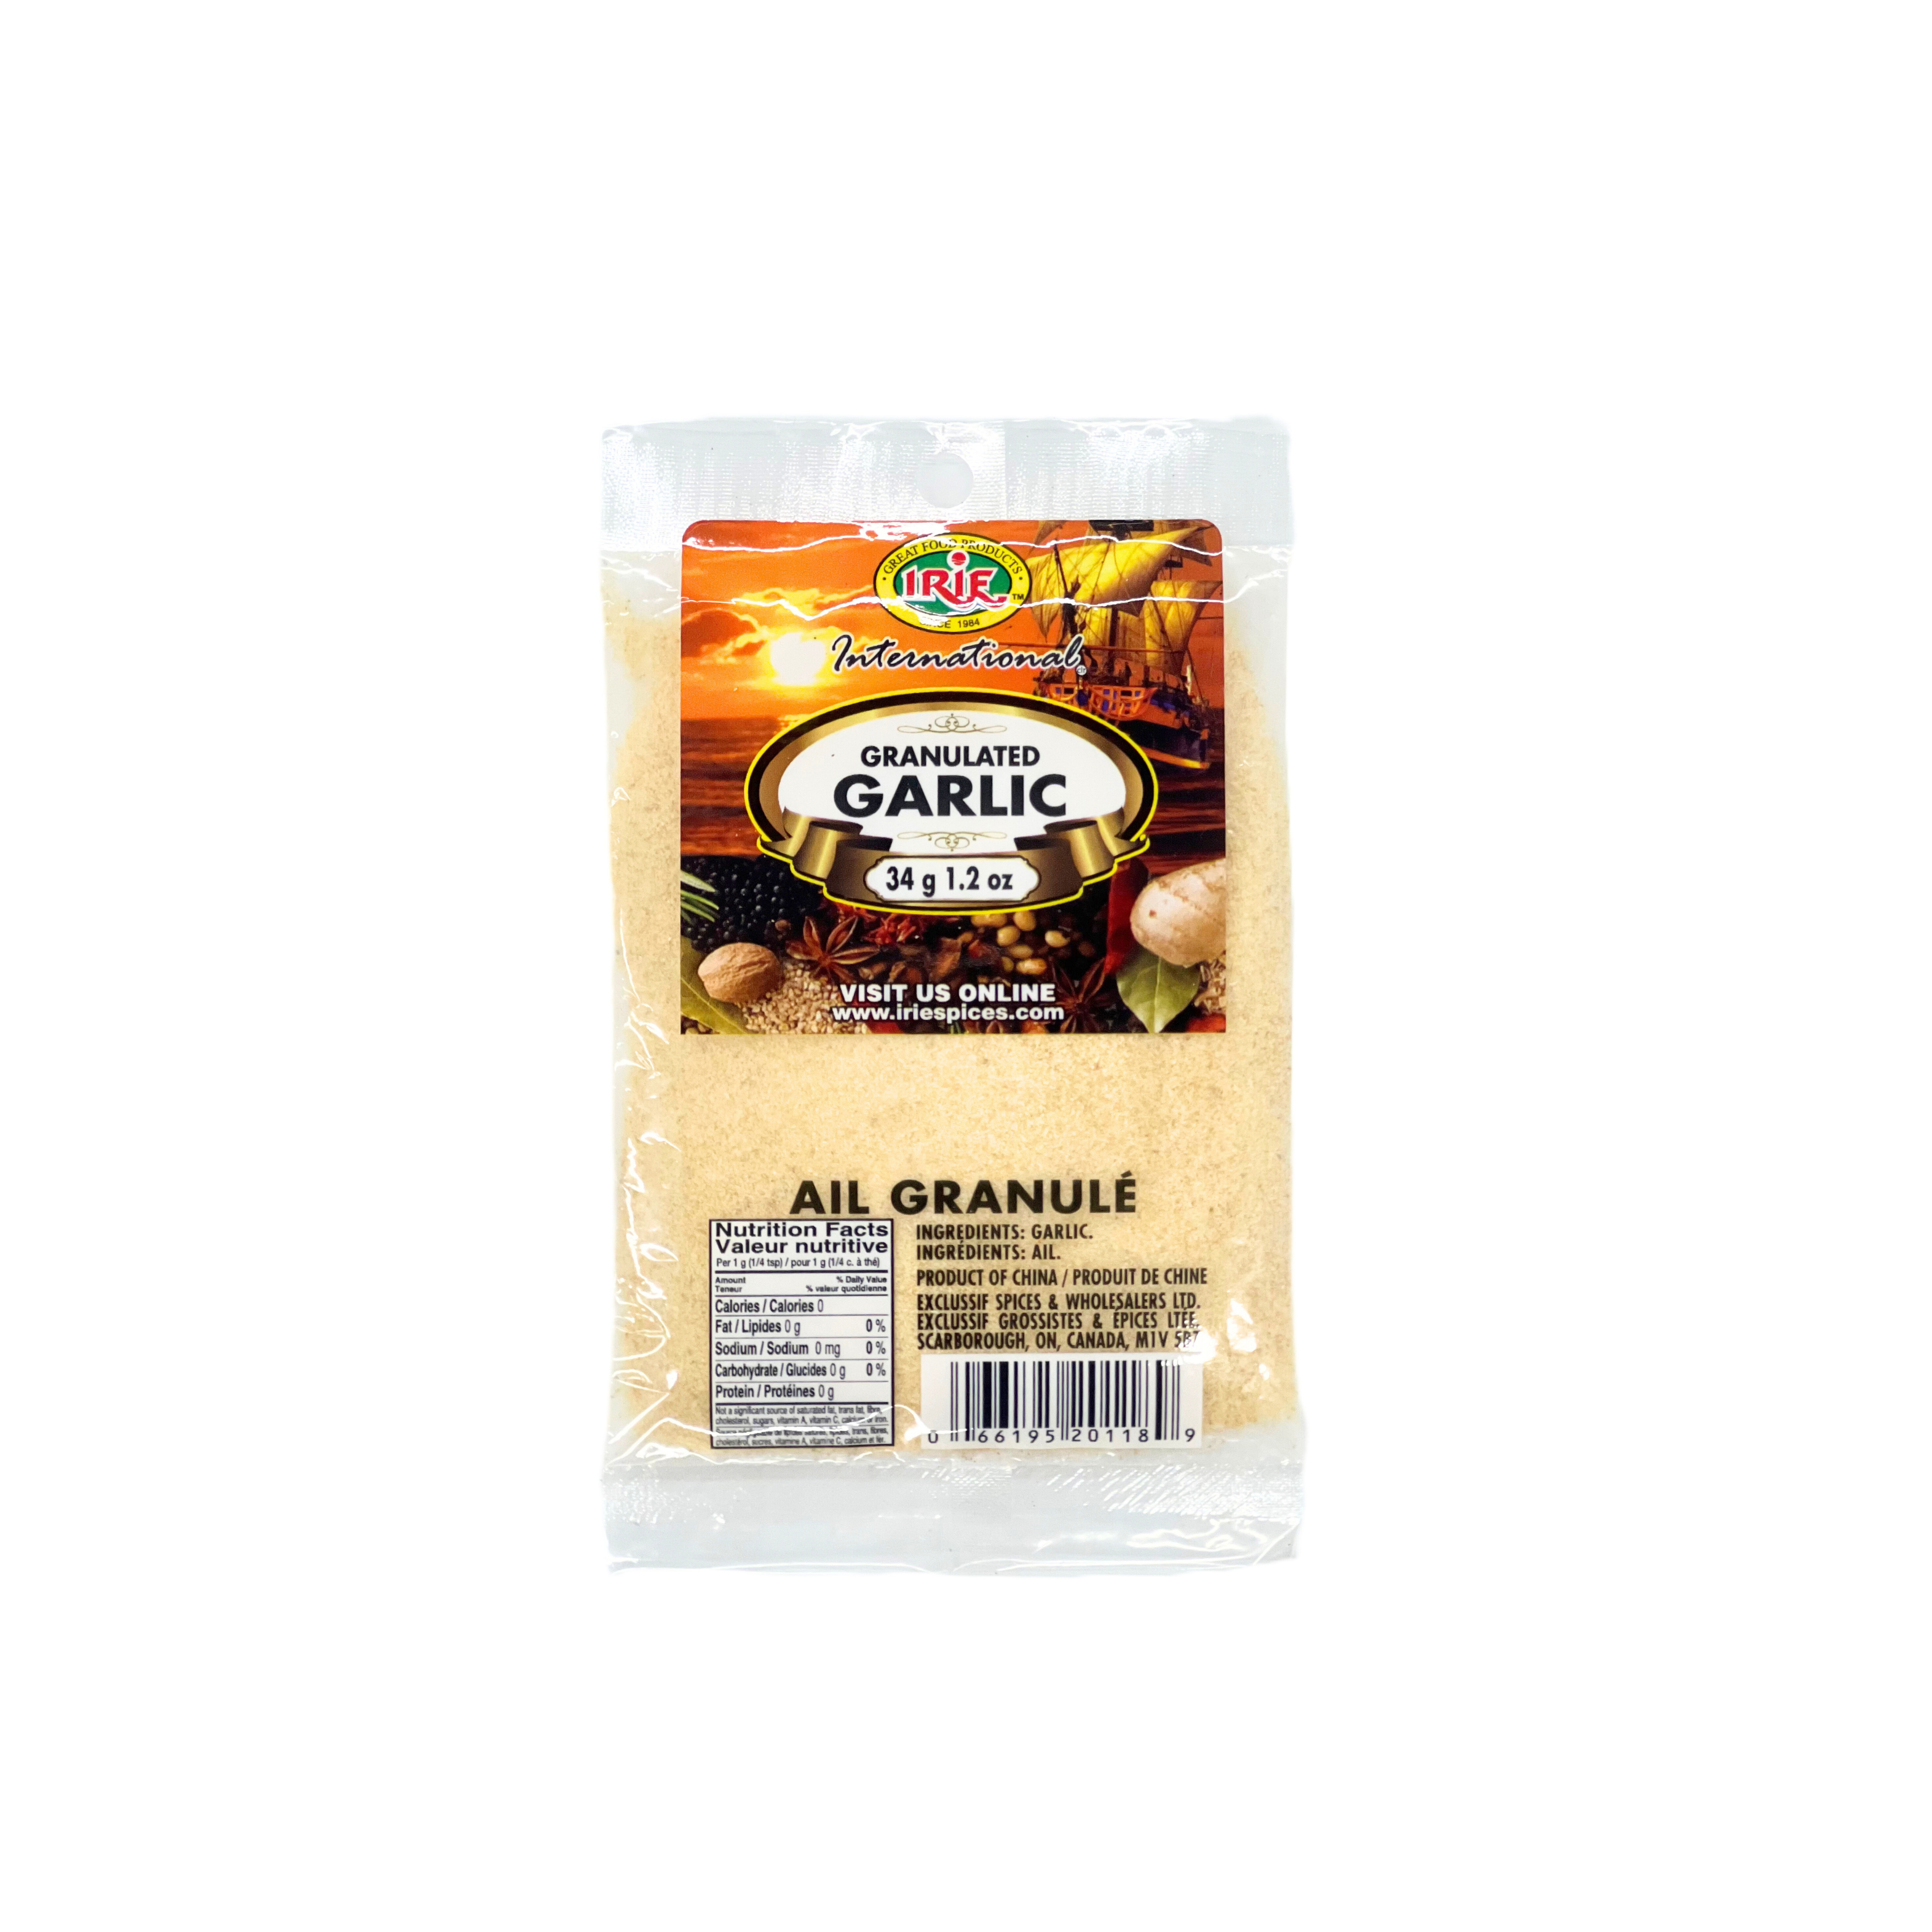 Irie Granulated Garlic 34g